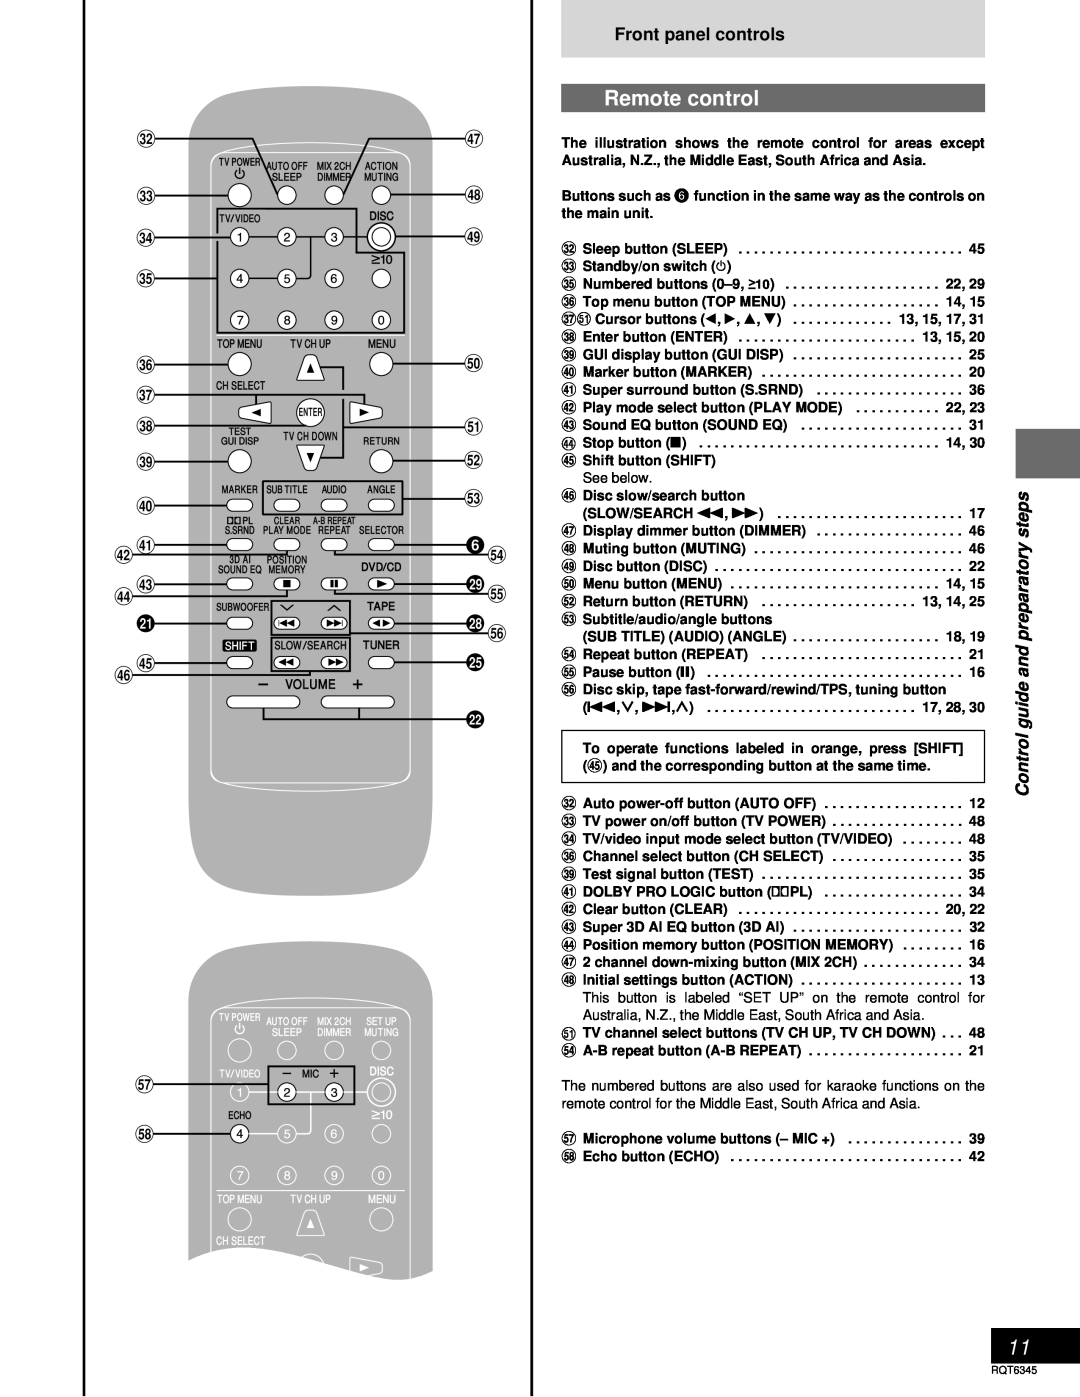 Panasonic SC-DK20 warranty Remote control, Front panel controls, steps, V 0 21, # $ 6% ? 